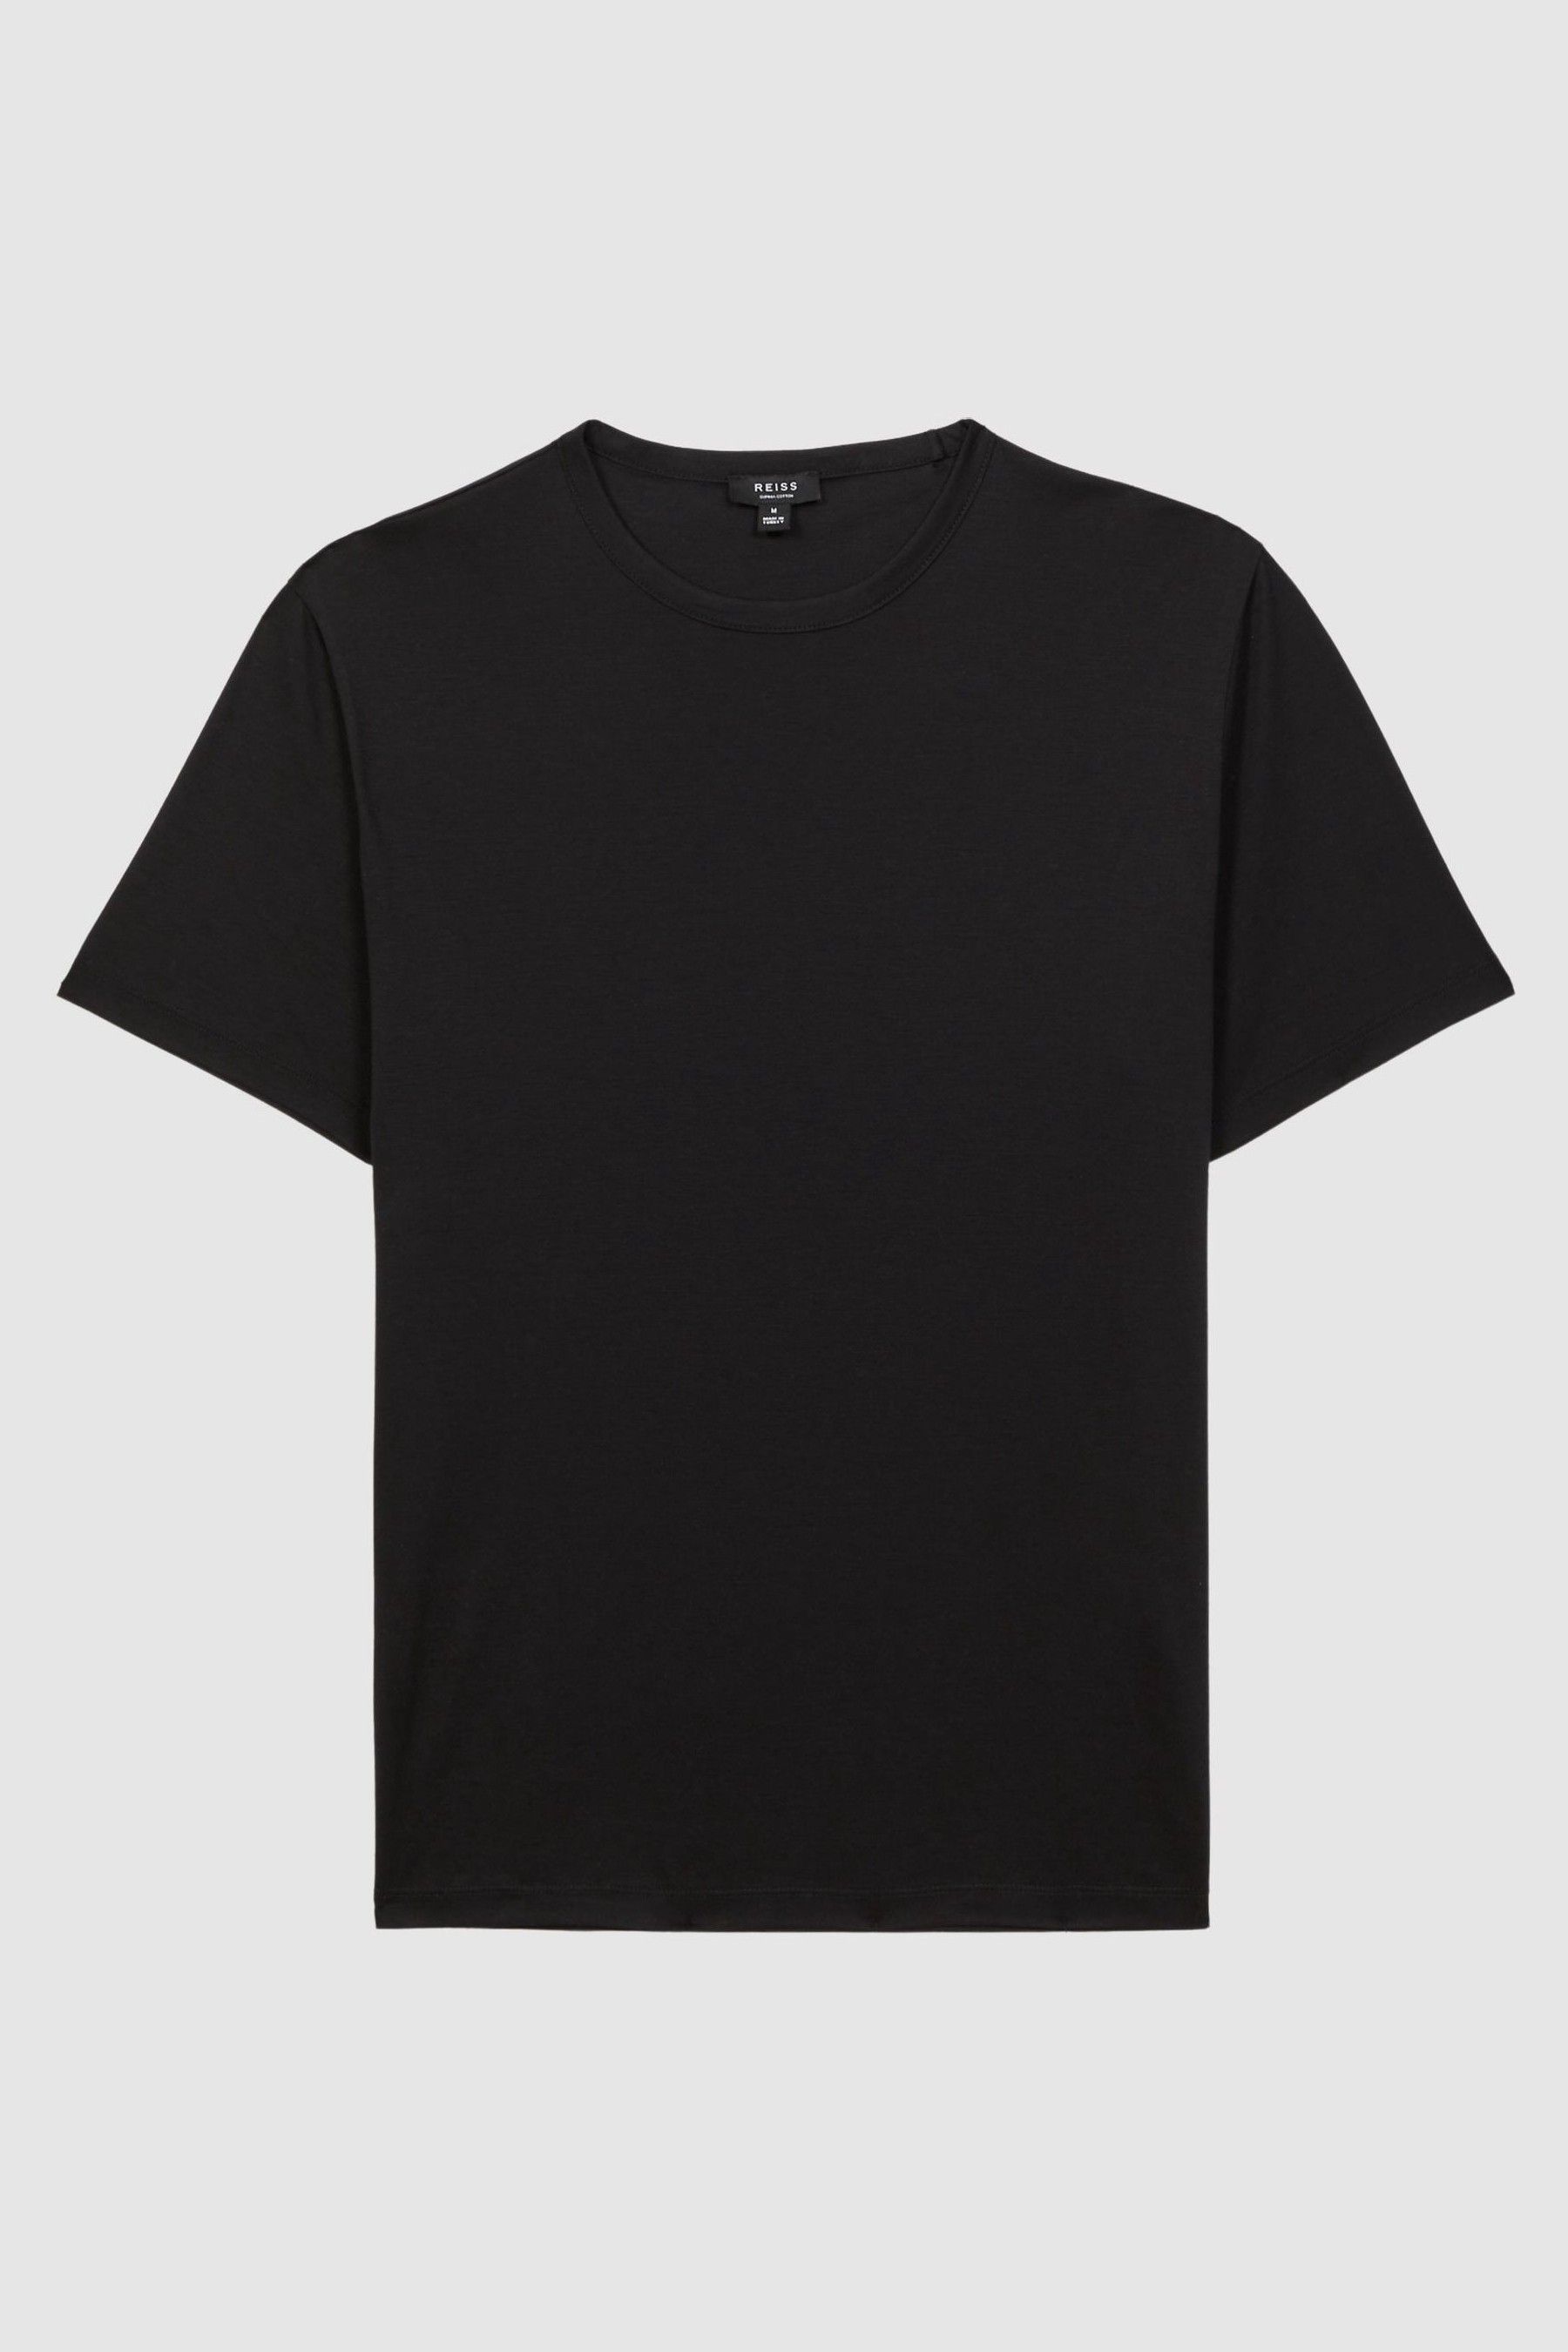 Buy Reiss Black Capri Cotton Crew Neck T-Shirt from the Next UK online shop